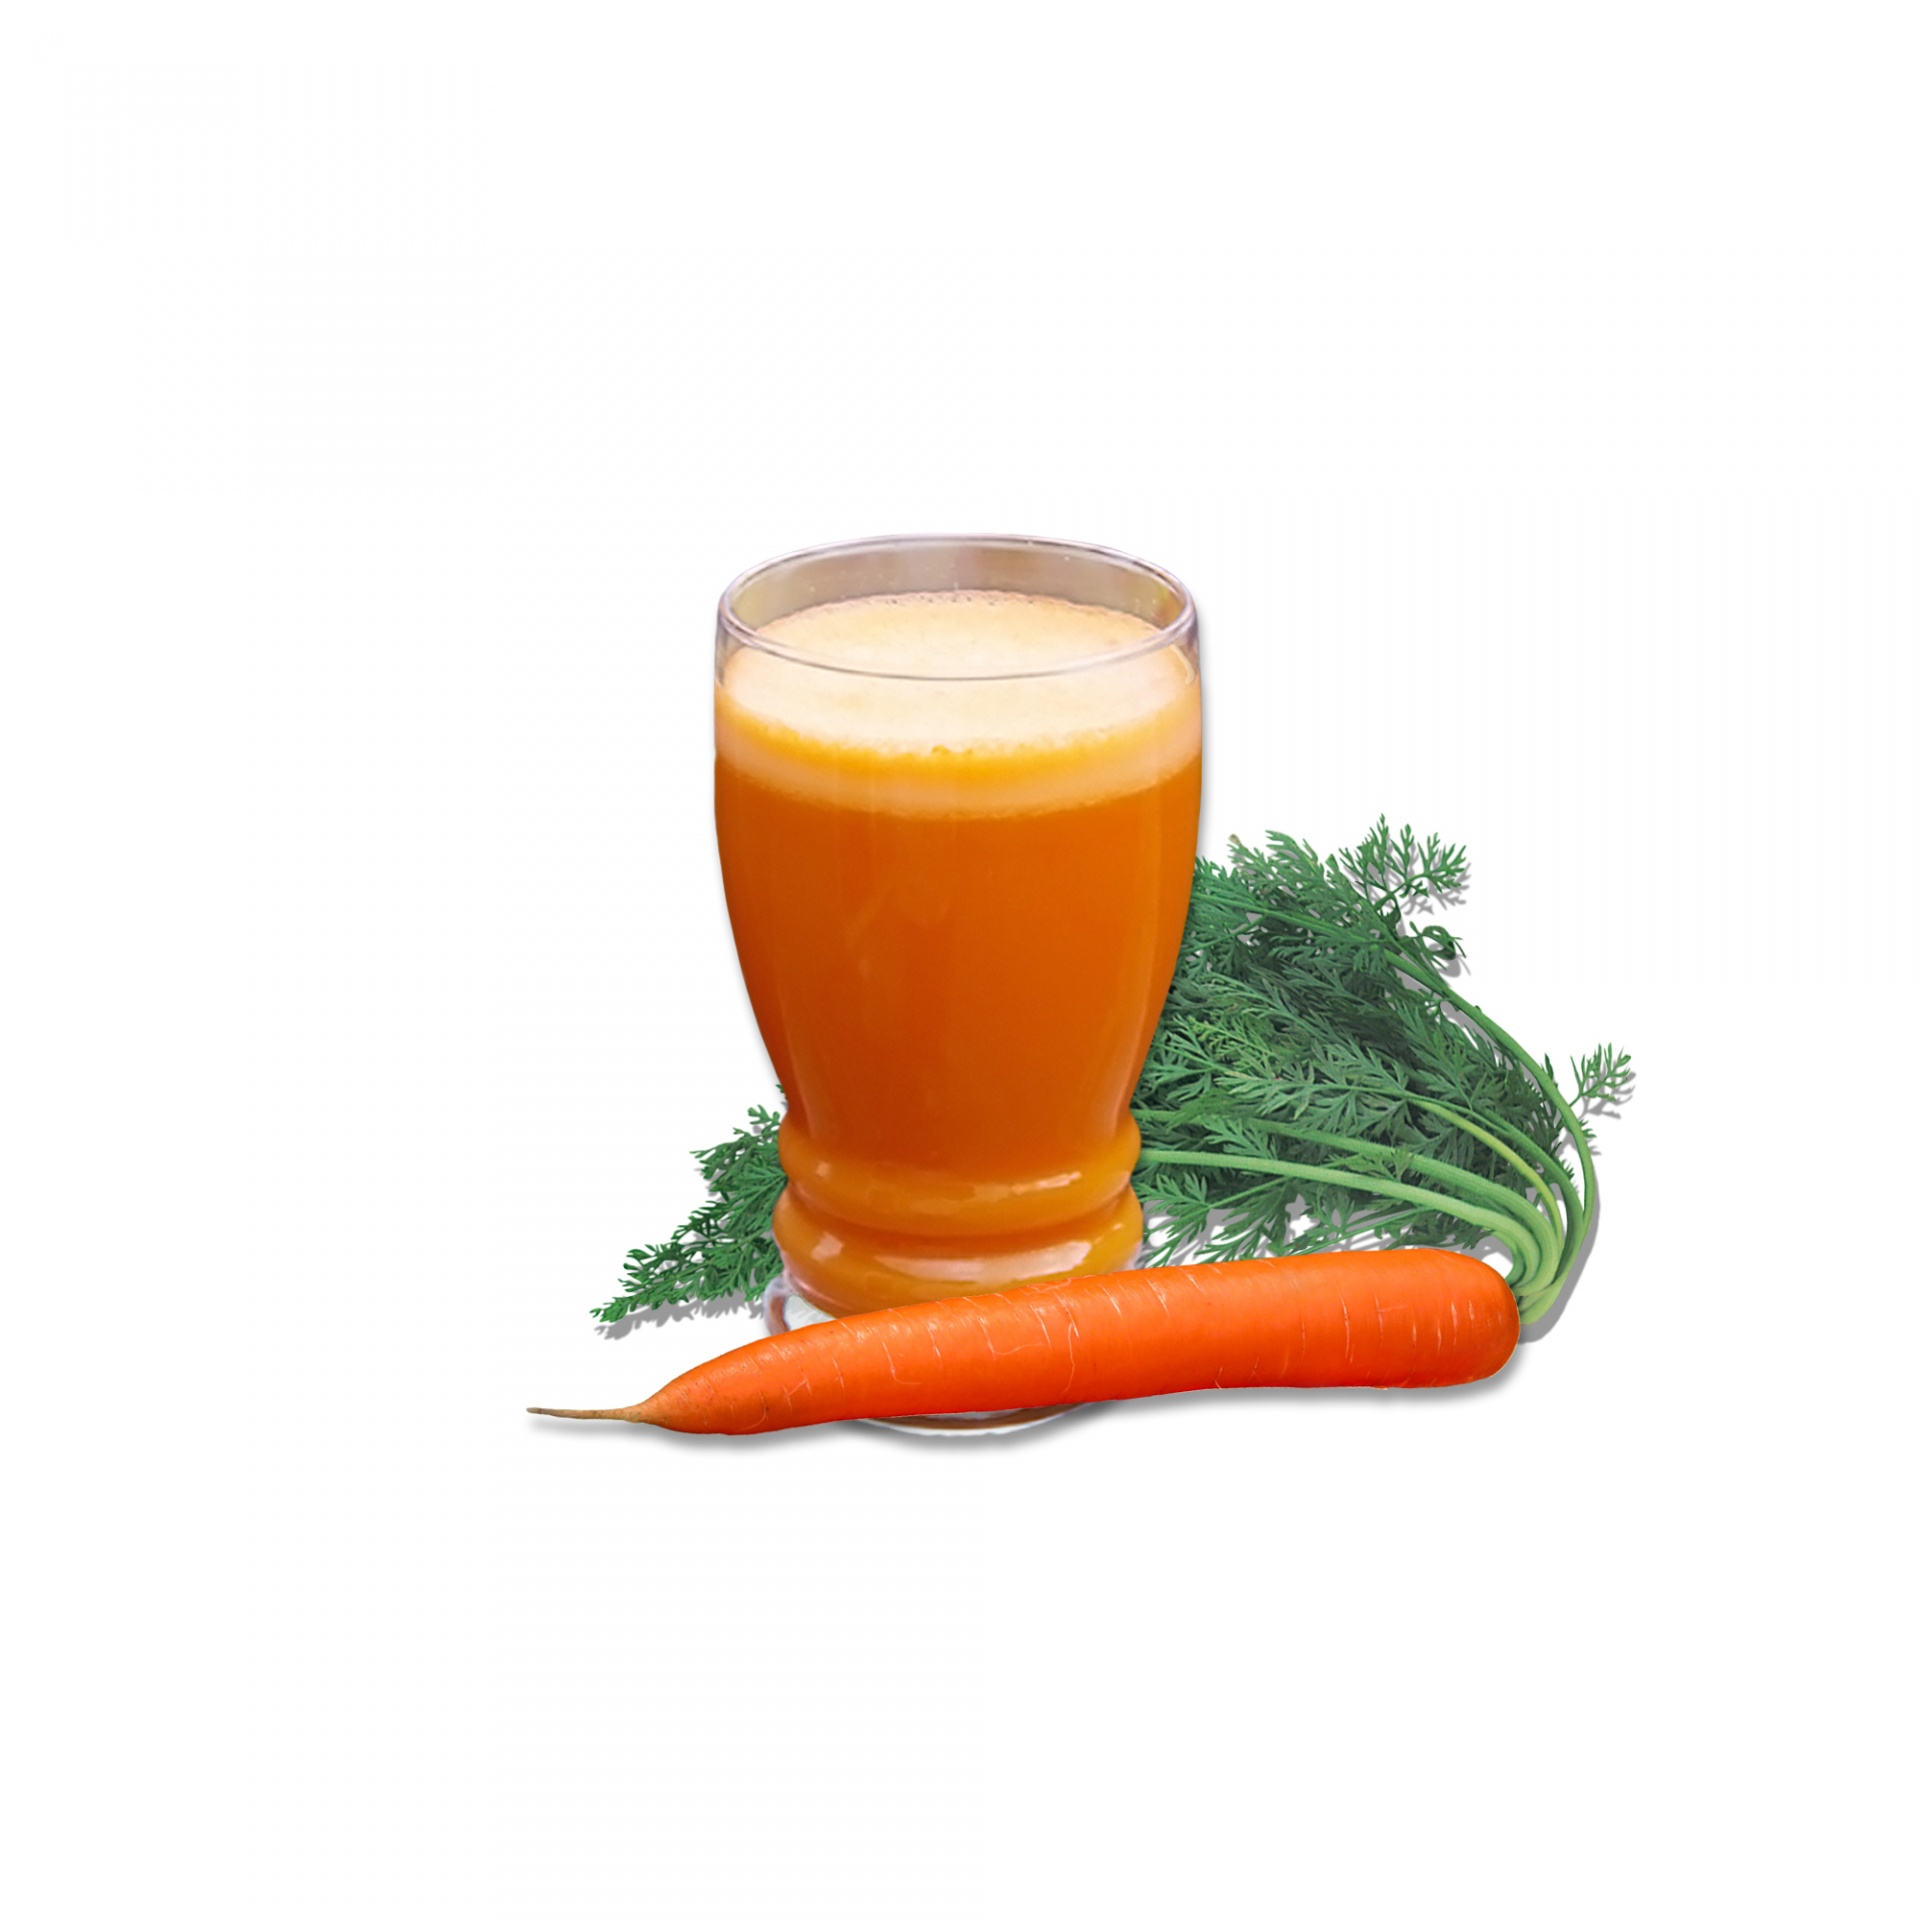 juice carrot juice glass free photo